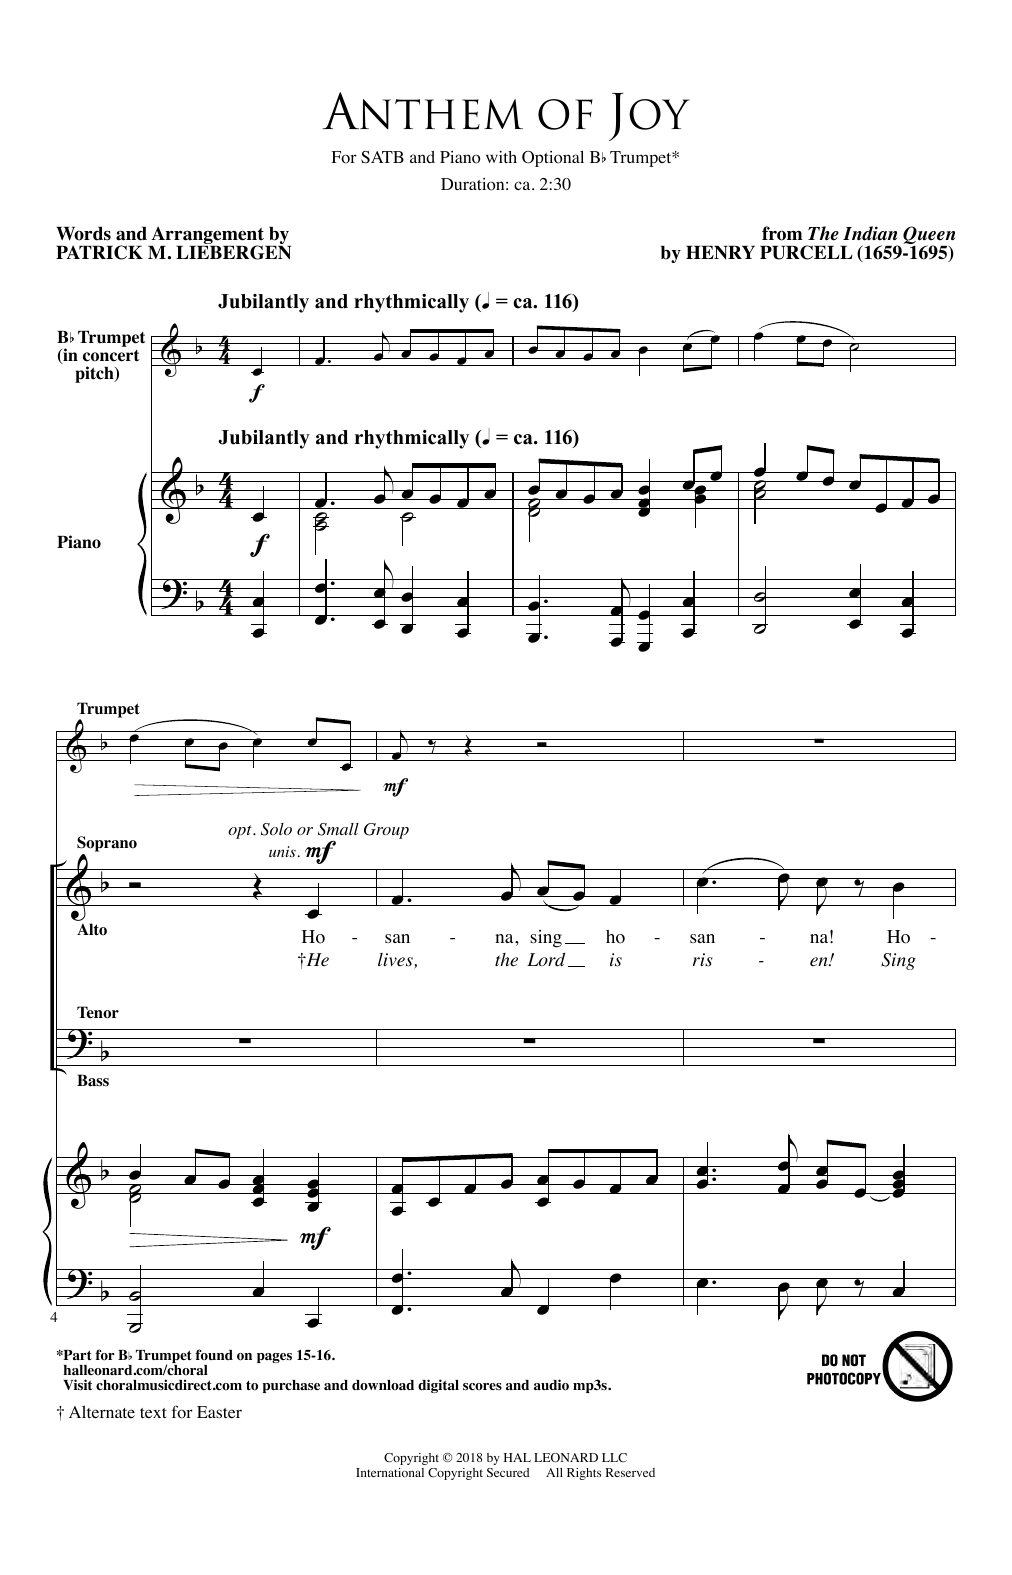 Patrick Liebergen Anthem Of Joy Sheet Music Notes & Chords for Choral - Download or Print PDF